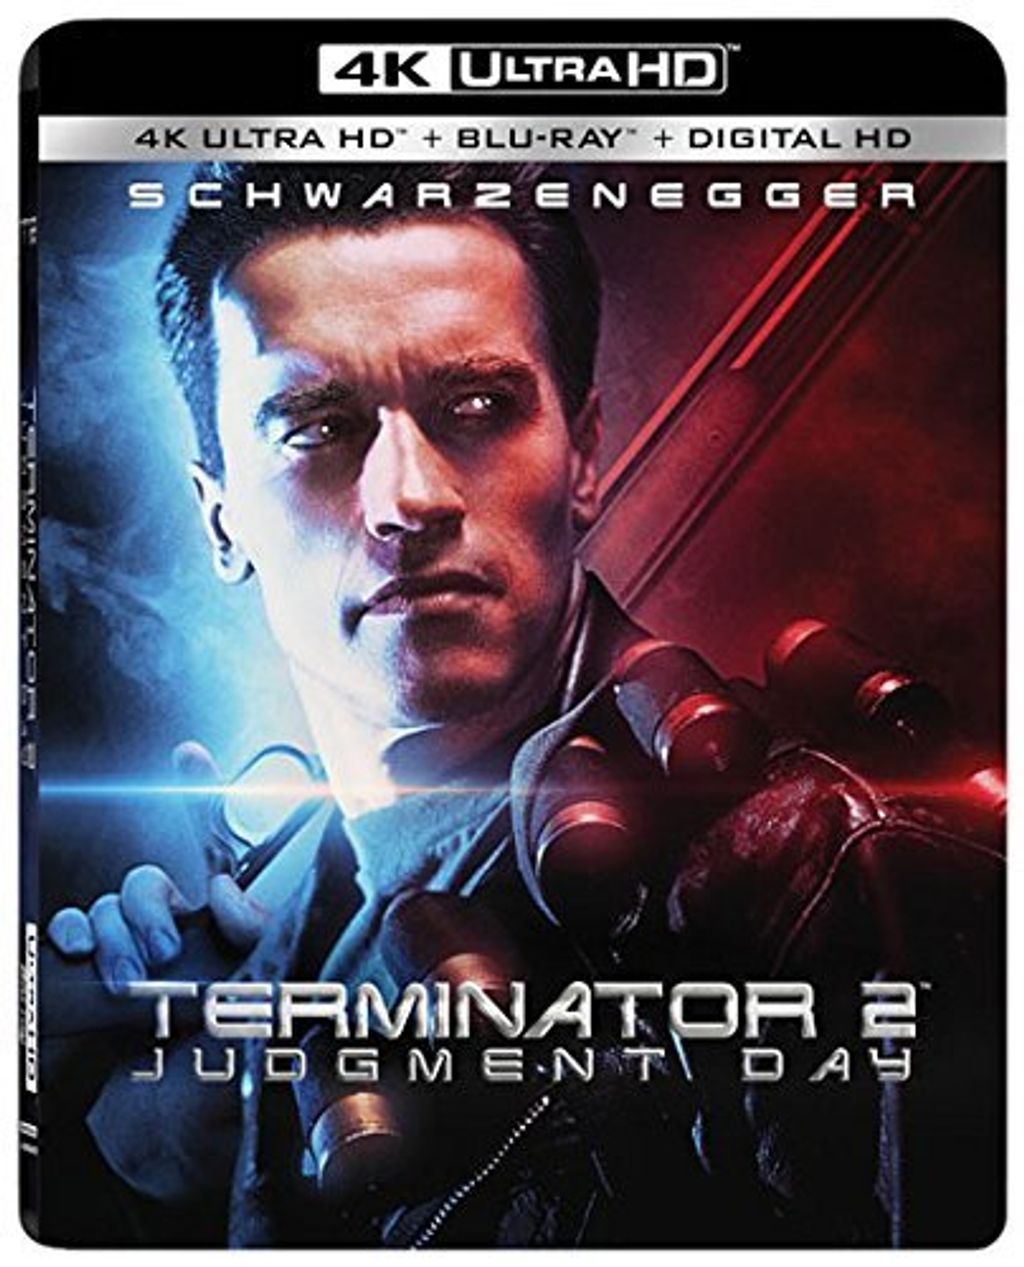 Terminator 2 Judgement Day 4K Bluray Disc Malaysia.jpg